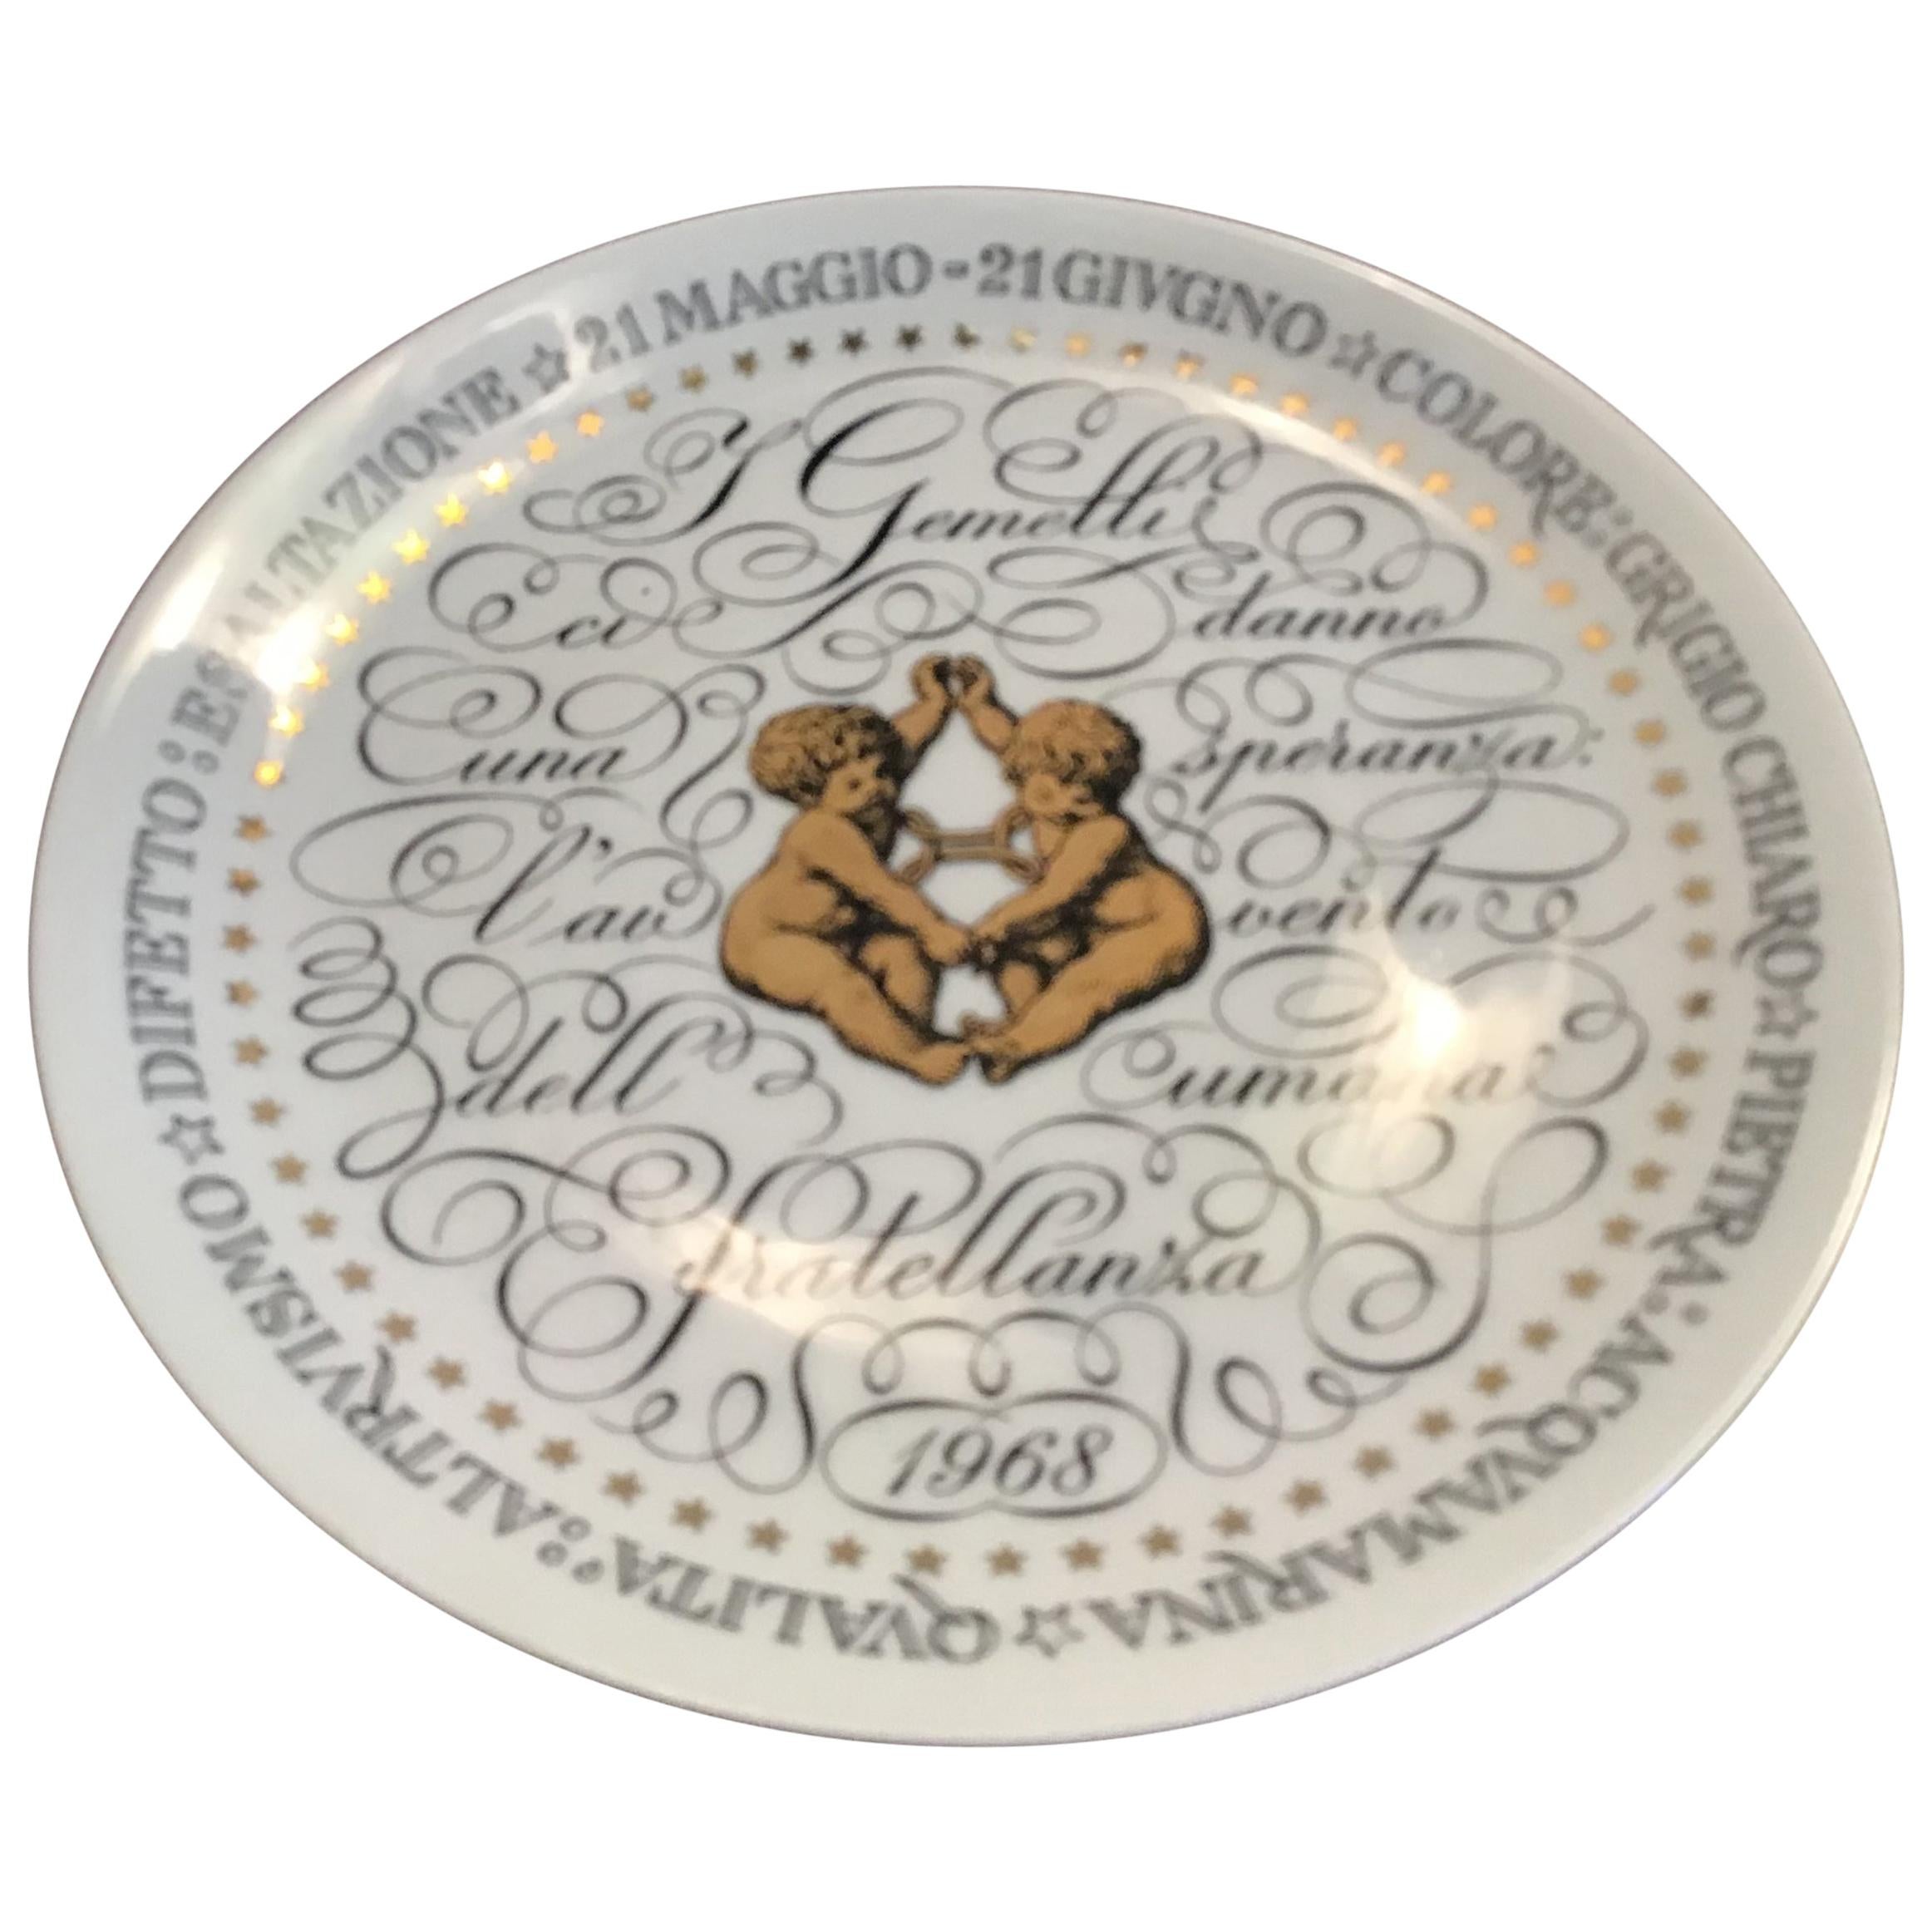 Piero Fornasetti Plate Gemini Zodiac Sign 1968 Porcelain, Italy